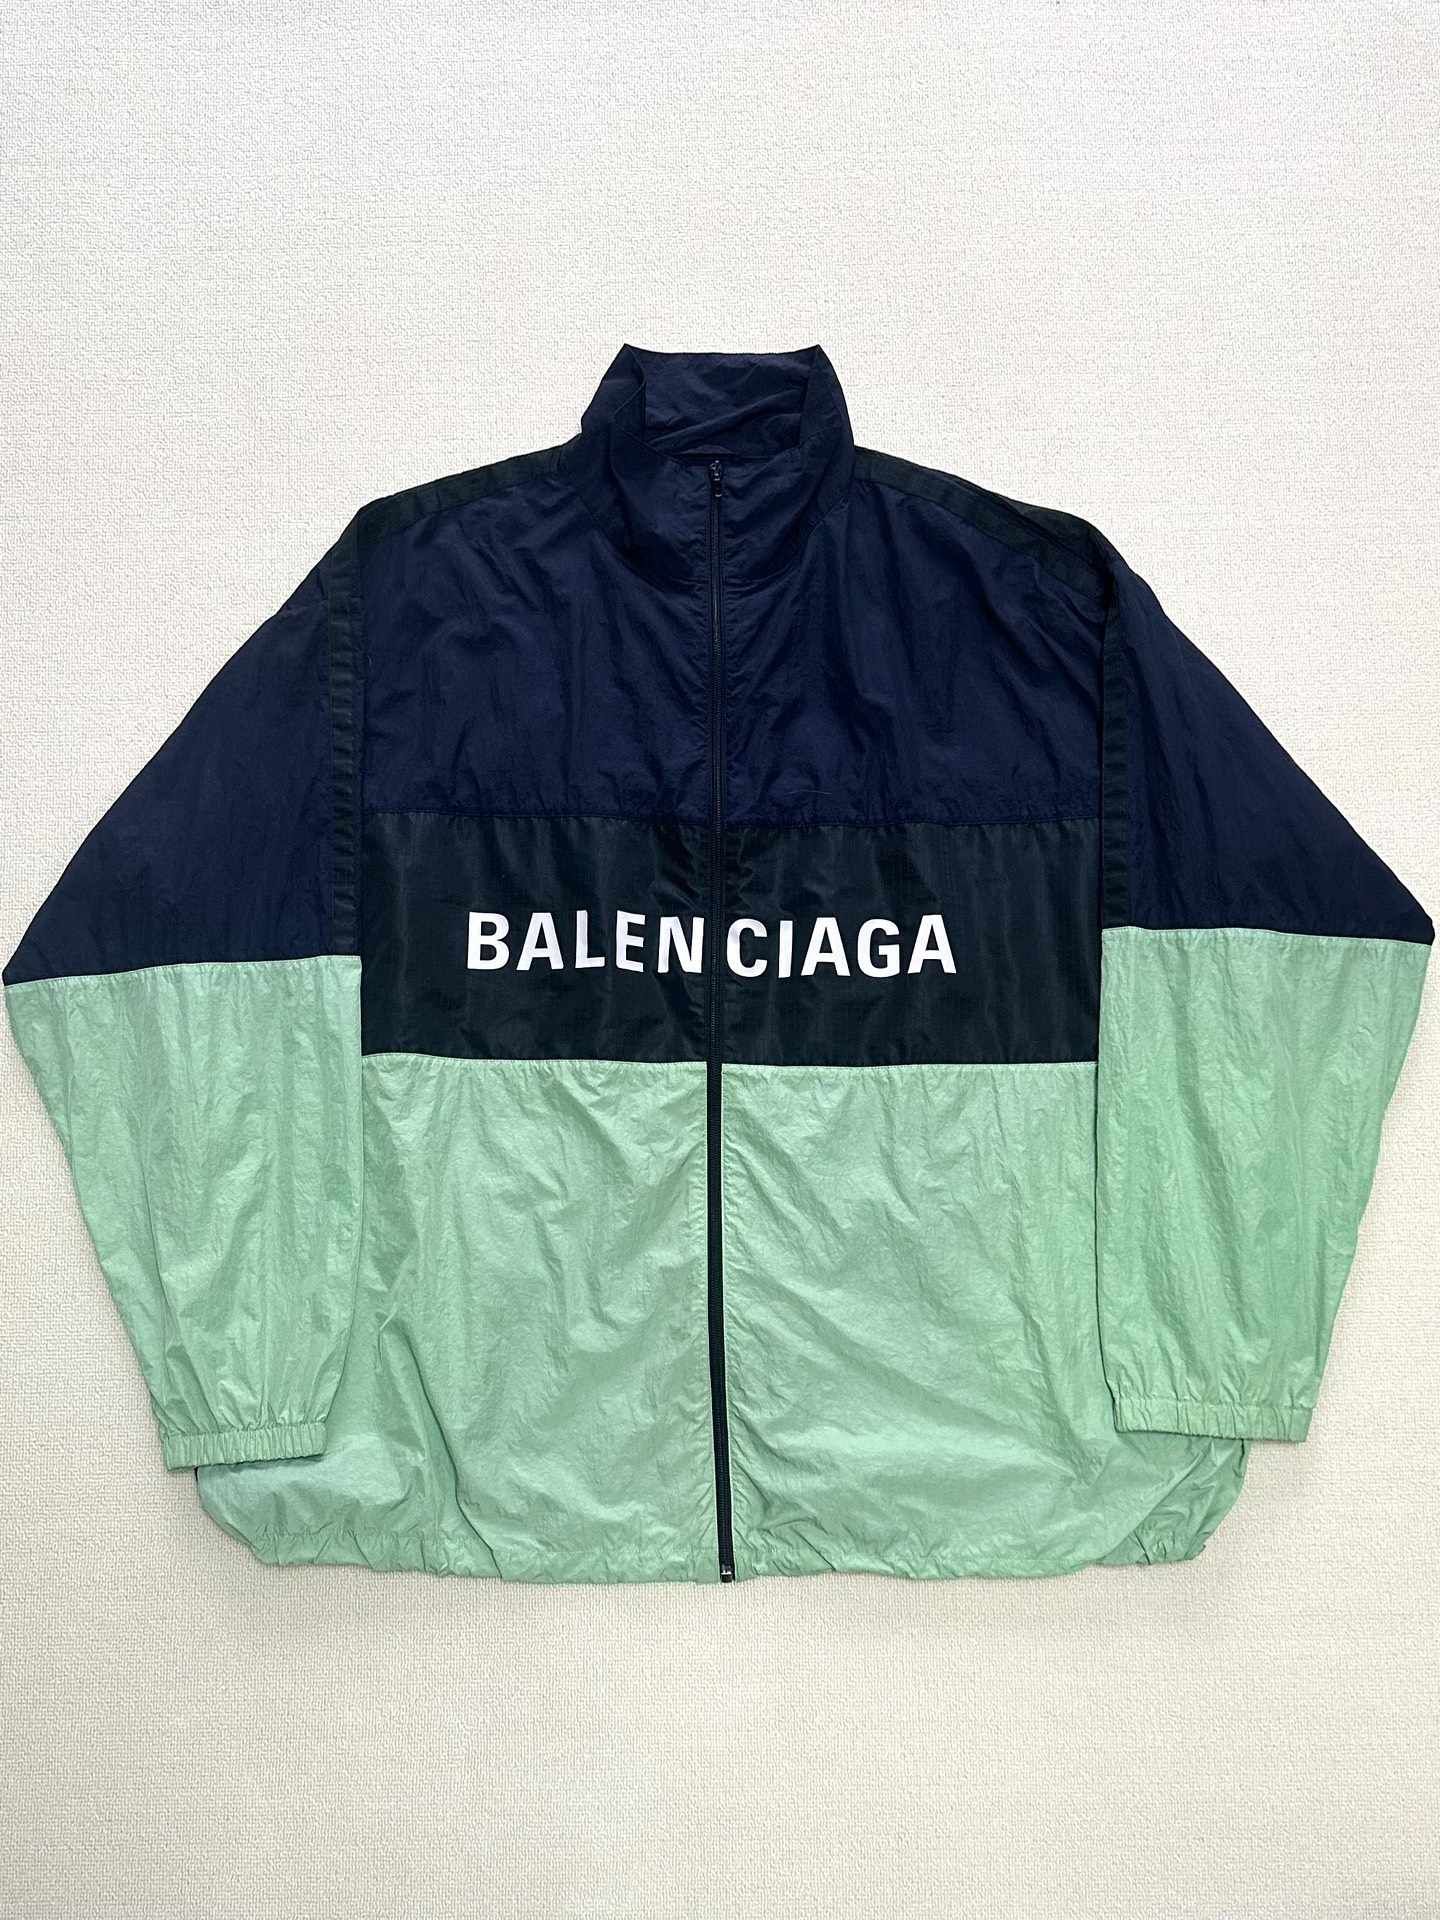 Balenciaga Black Neon Green Tracksuit Jacket - 1